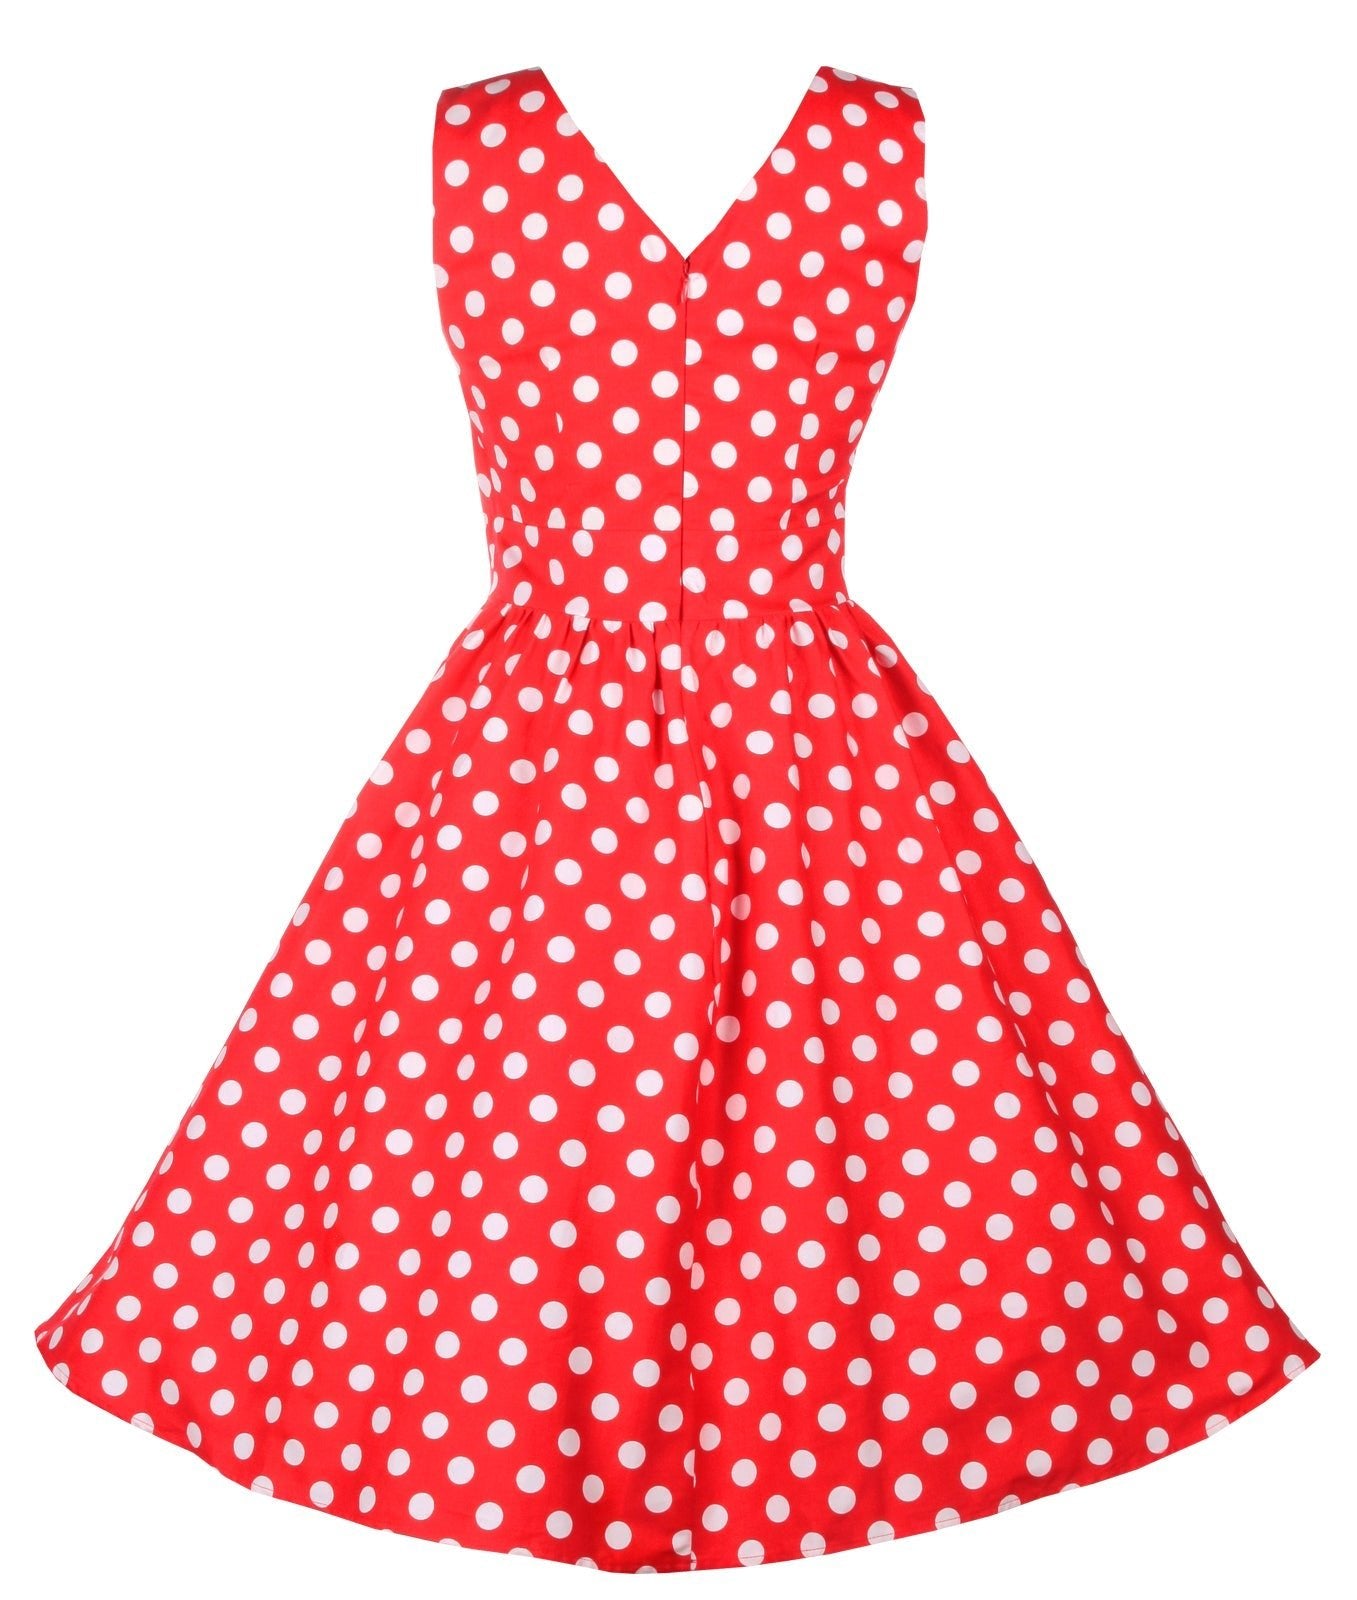 V-neck 50s Style Spot Dress in Red